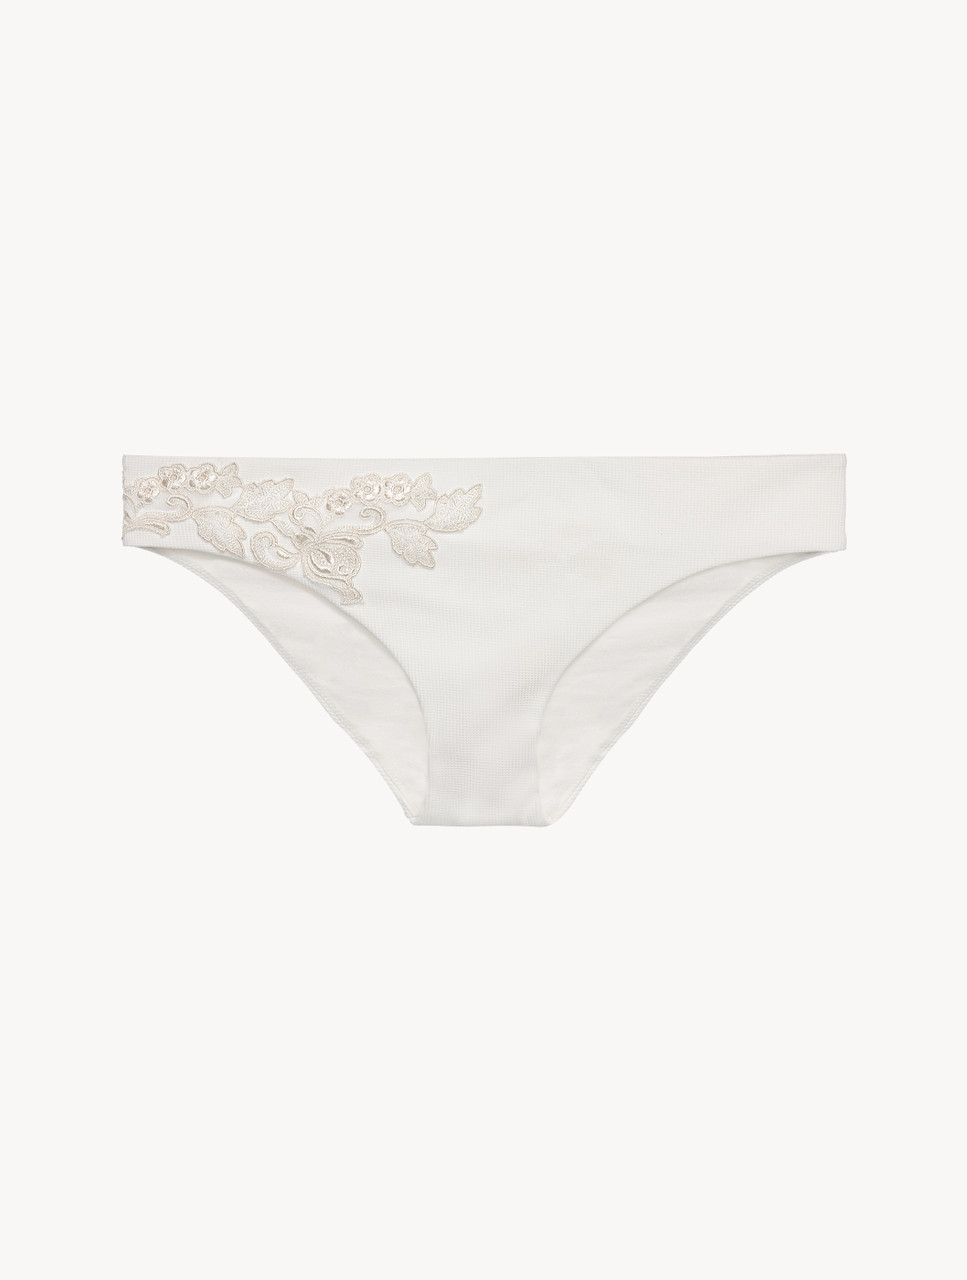 Mid-rise Bikini Briefs in off-white with ivory embroidery - La